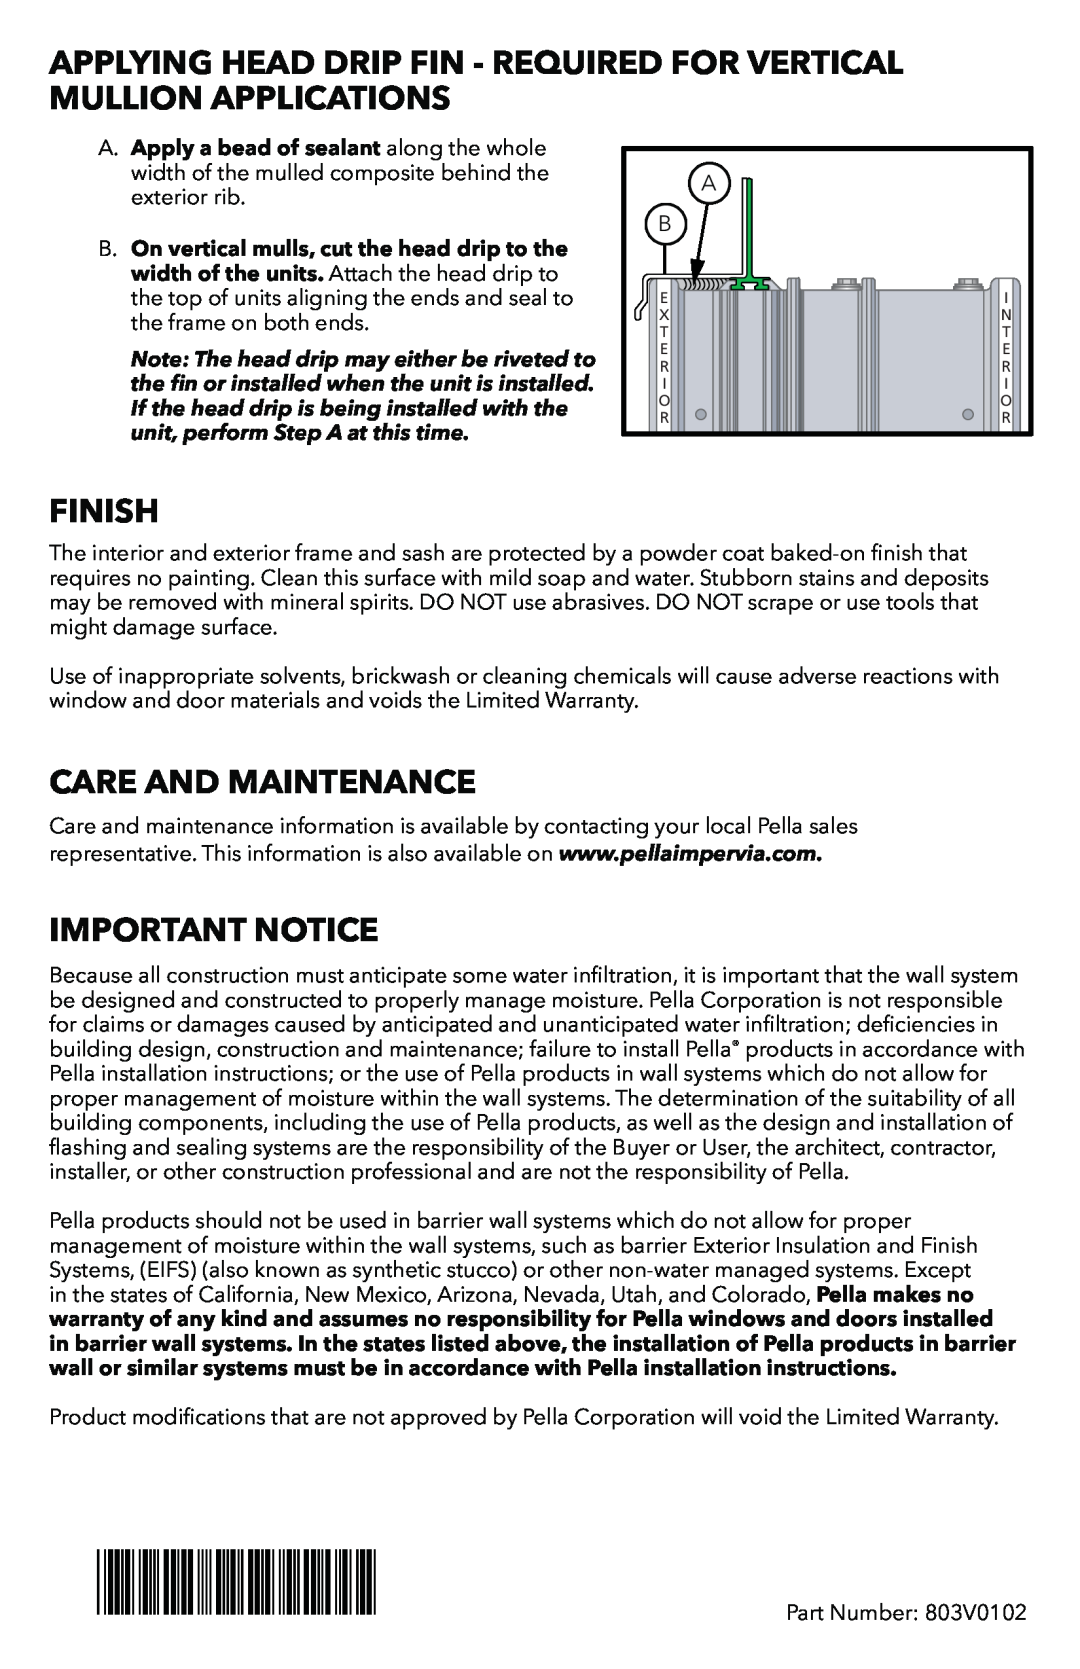 Pella 803V0102 installation instructions Finish, Care And Maintenance, Important Notice 